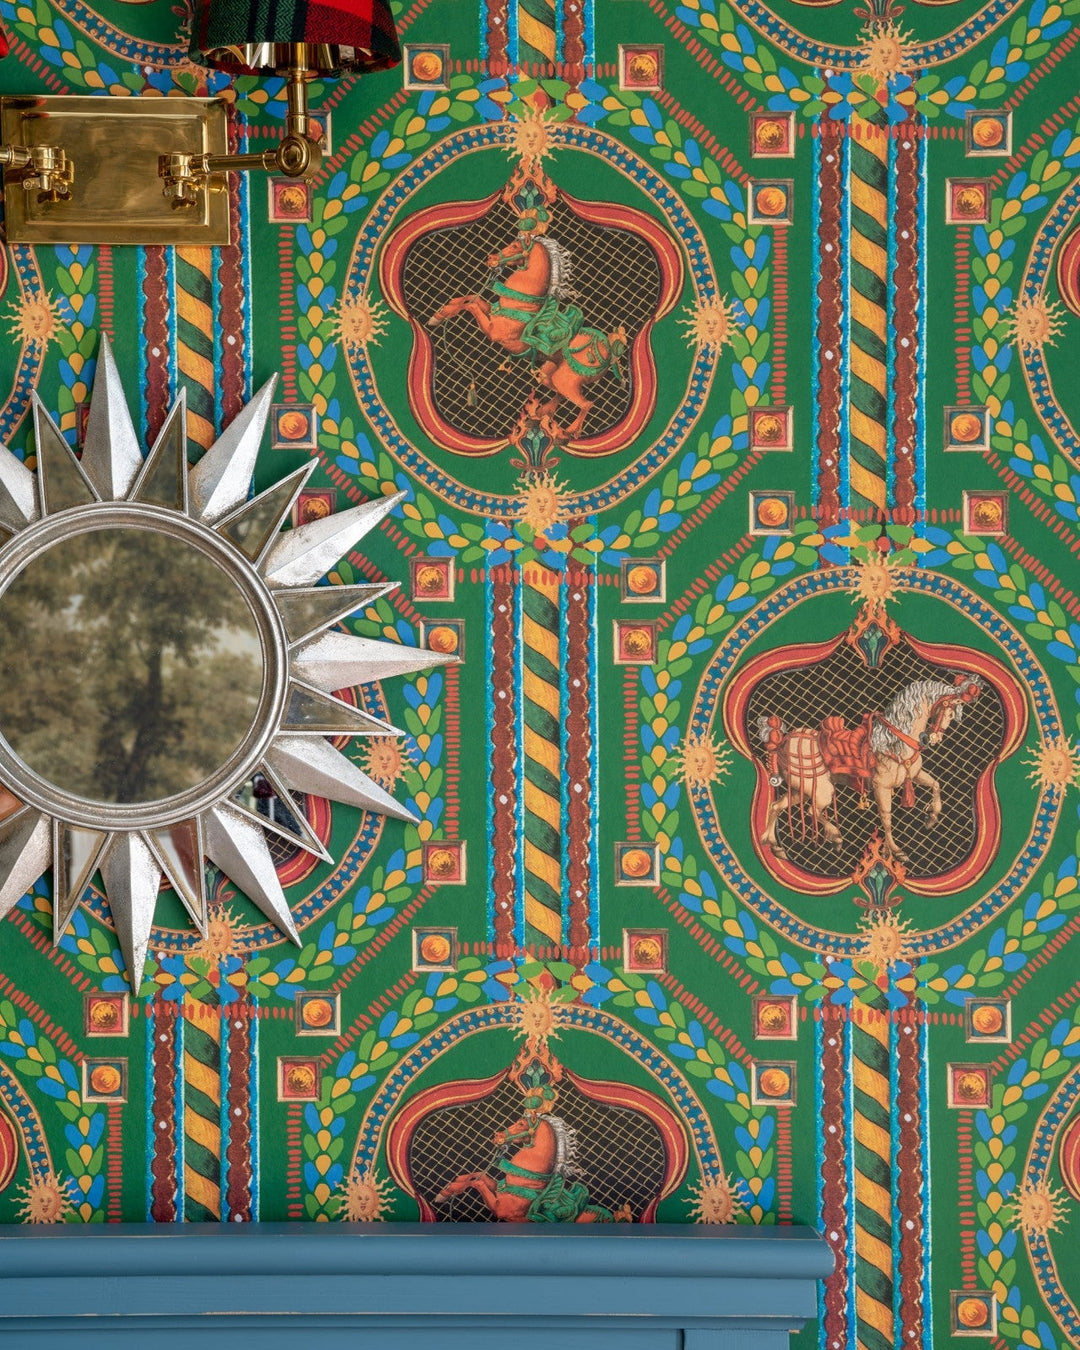 Mind-The-gap-Venetian-ornament-wallpaper-carnival-inspired-merry-go-round-Carousel-ornate-sun-motif-circus-theme-Green-WP20768